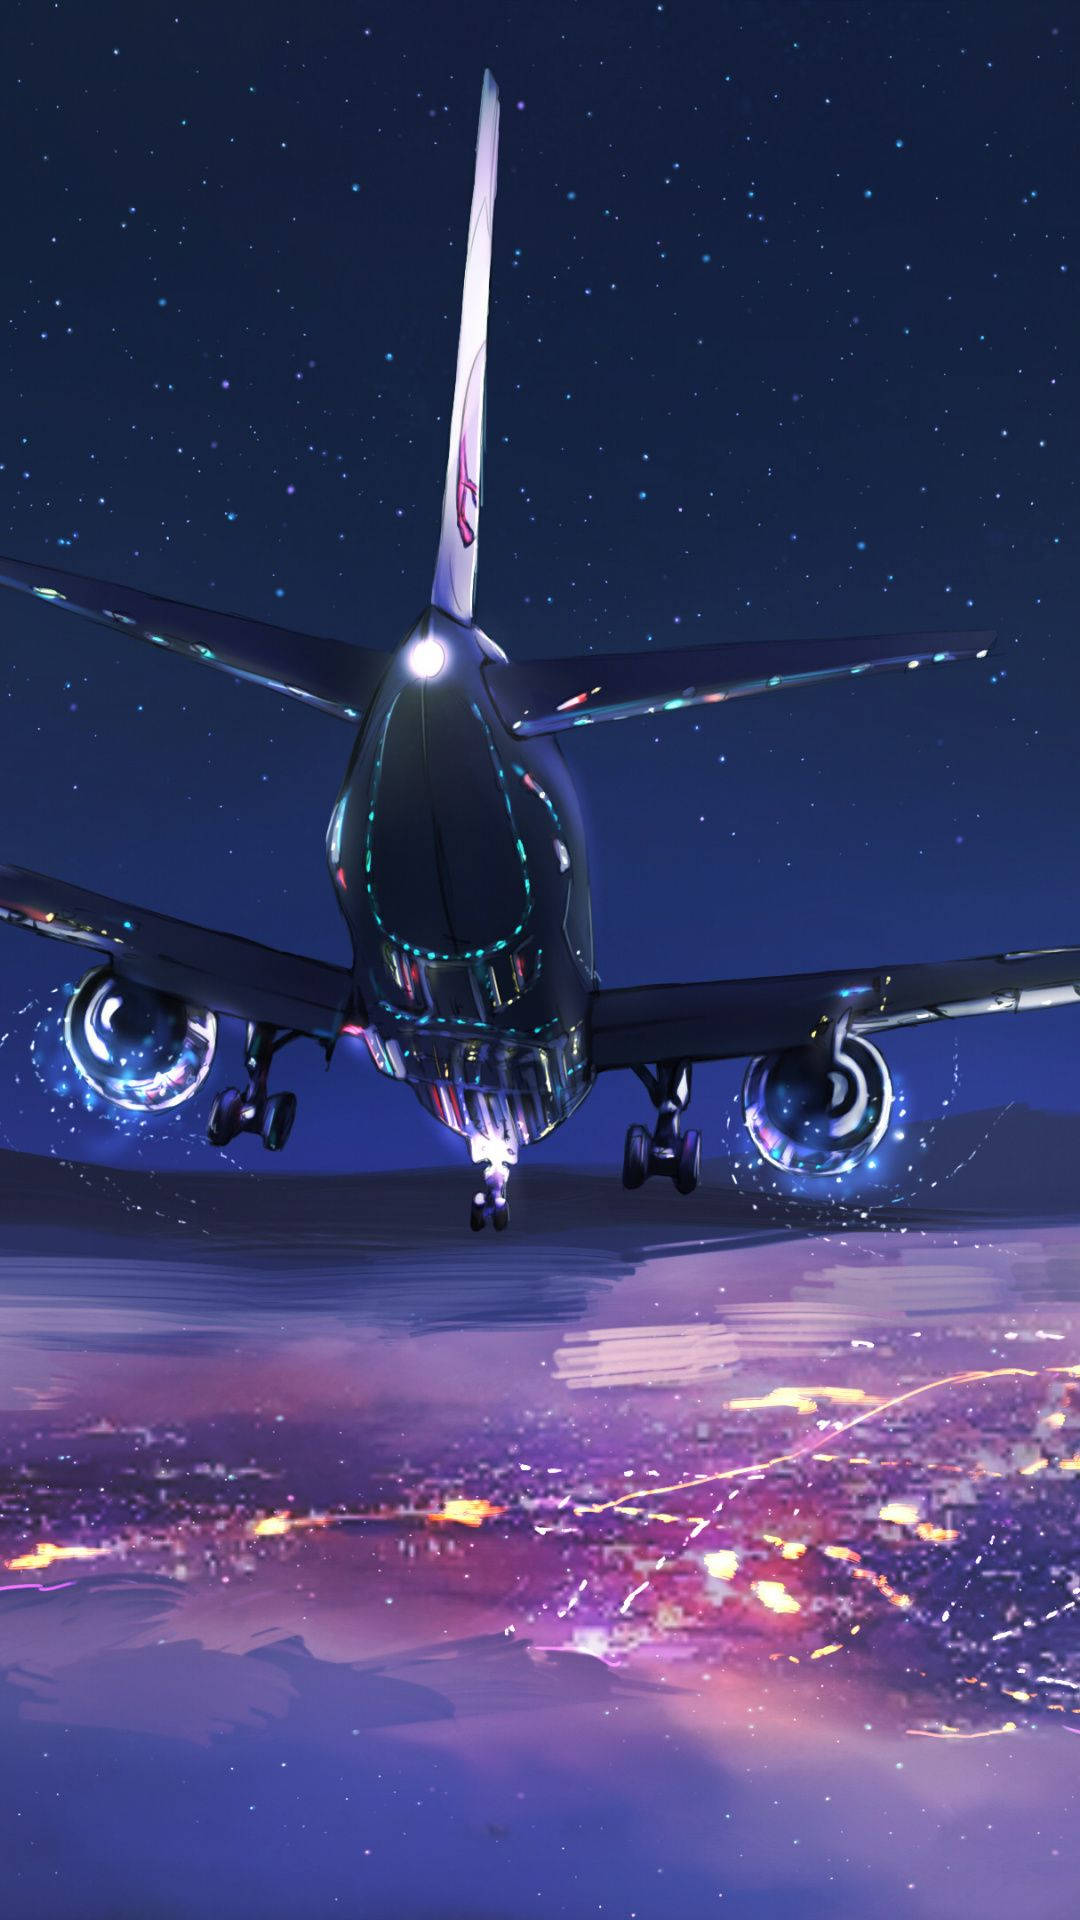 Aeroplane Starry Night View Wallpaper